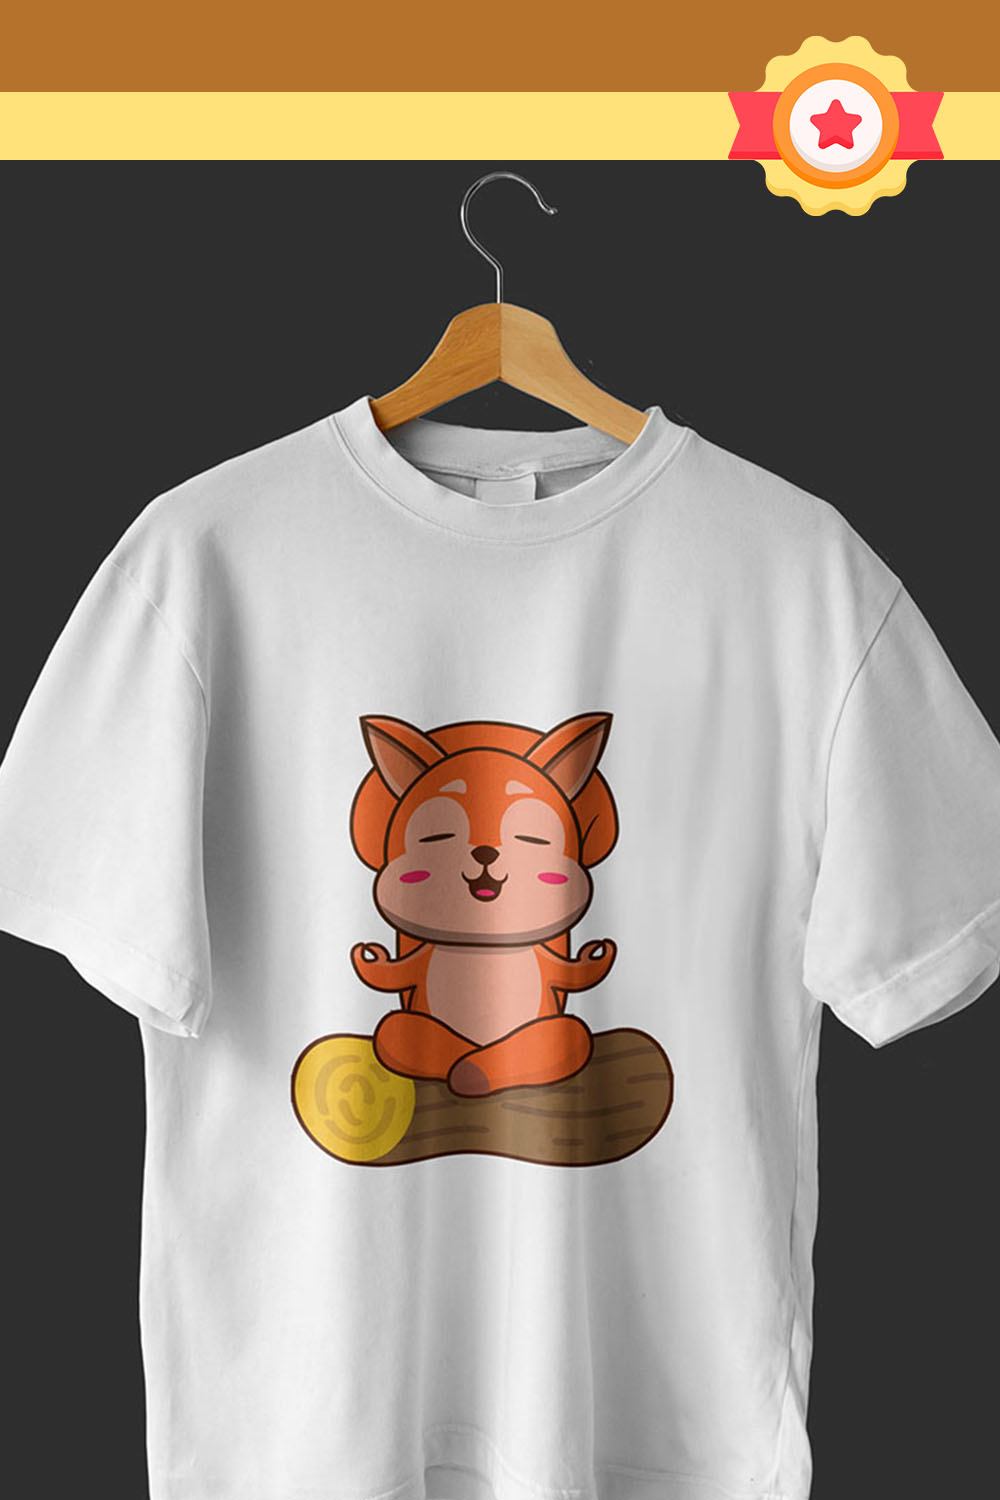 Cute Squirrel Illustrations T-Shirt pinterest image.